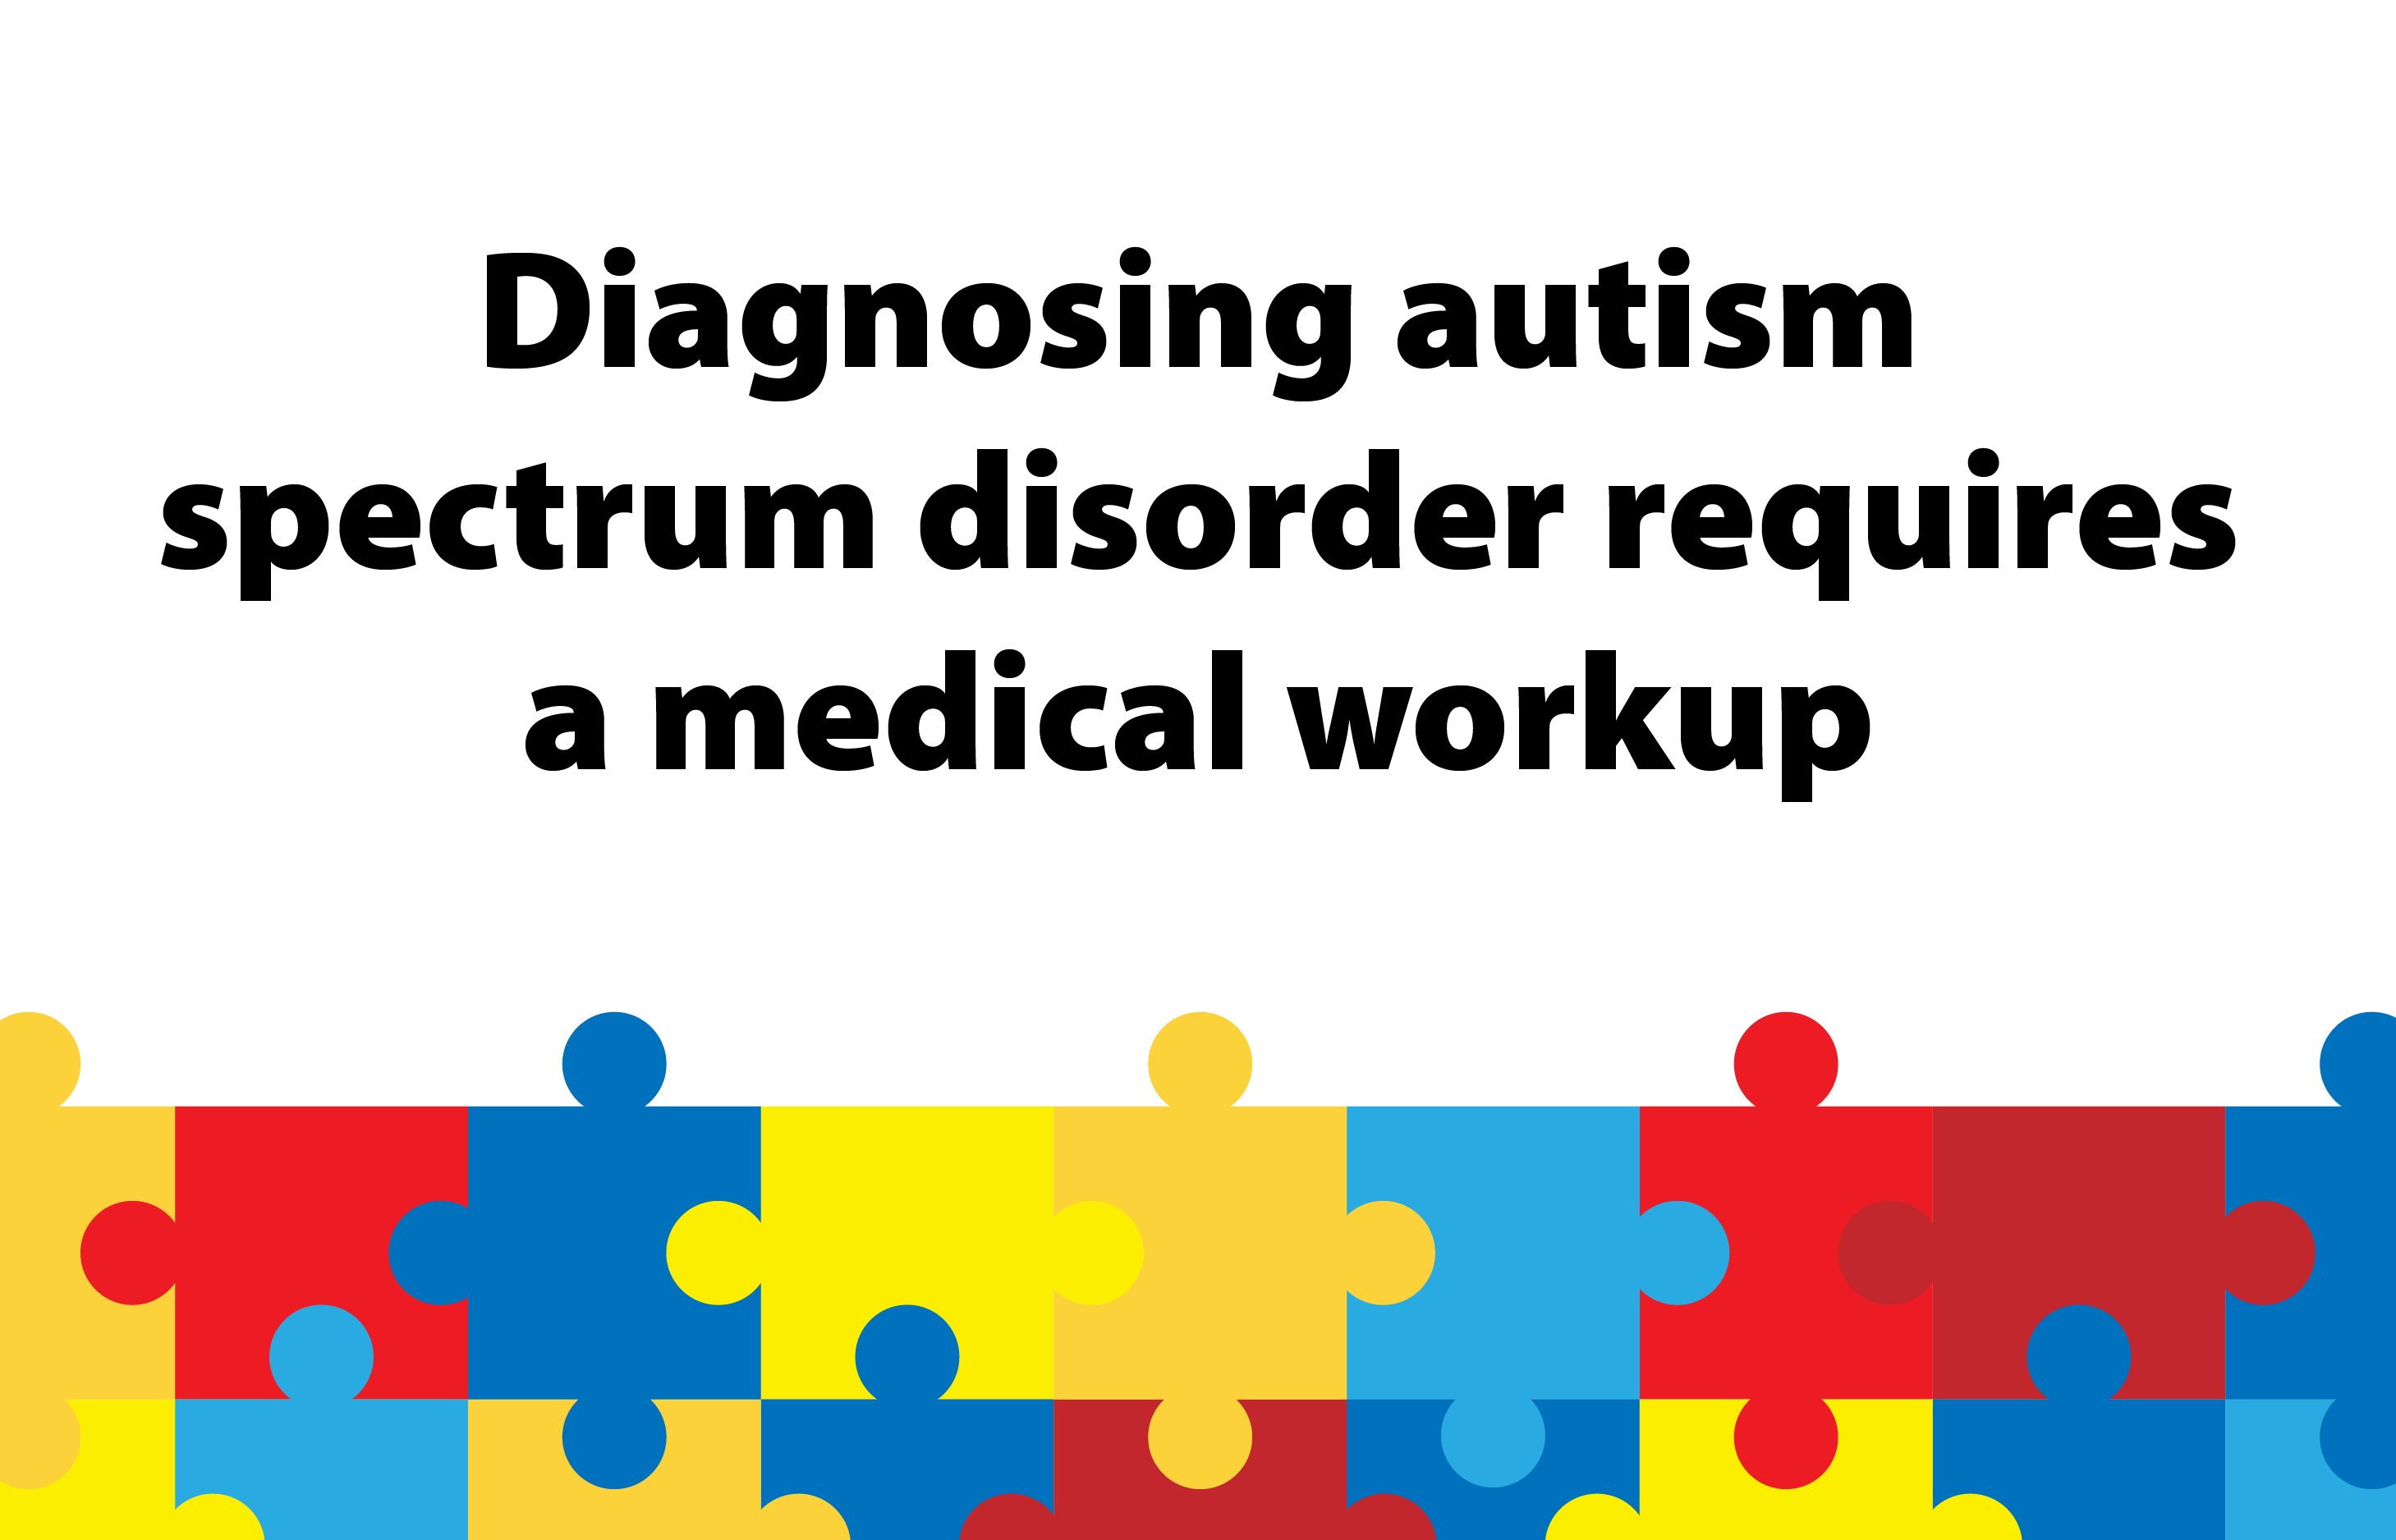 Diagnosing autism spectrum disorder requires a medical workup